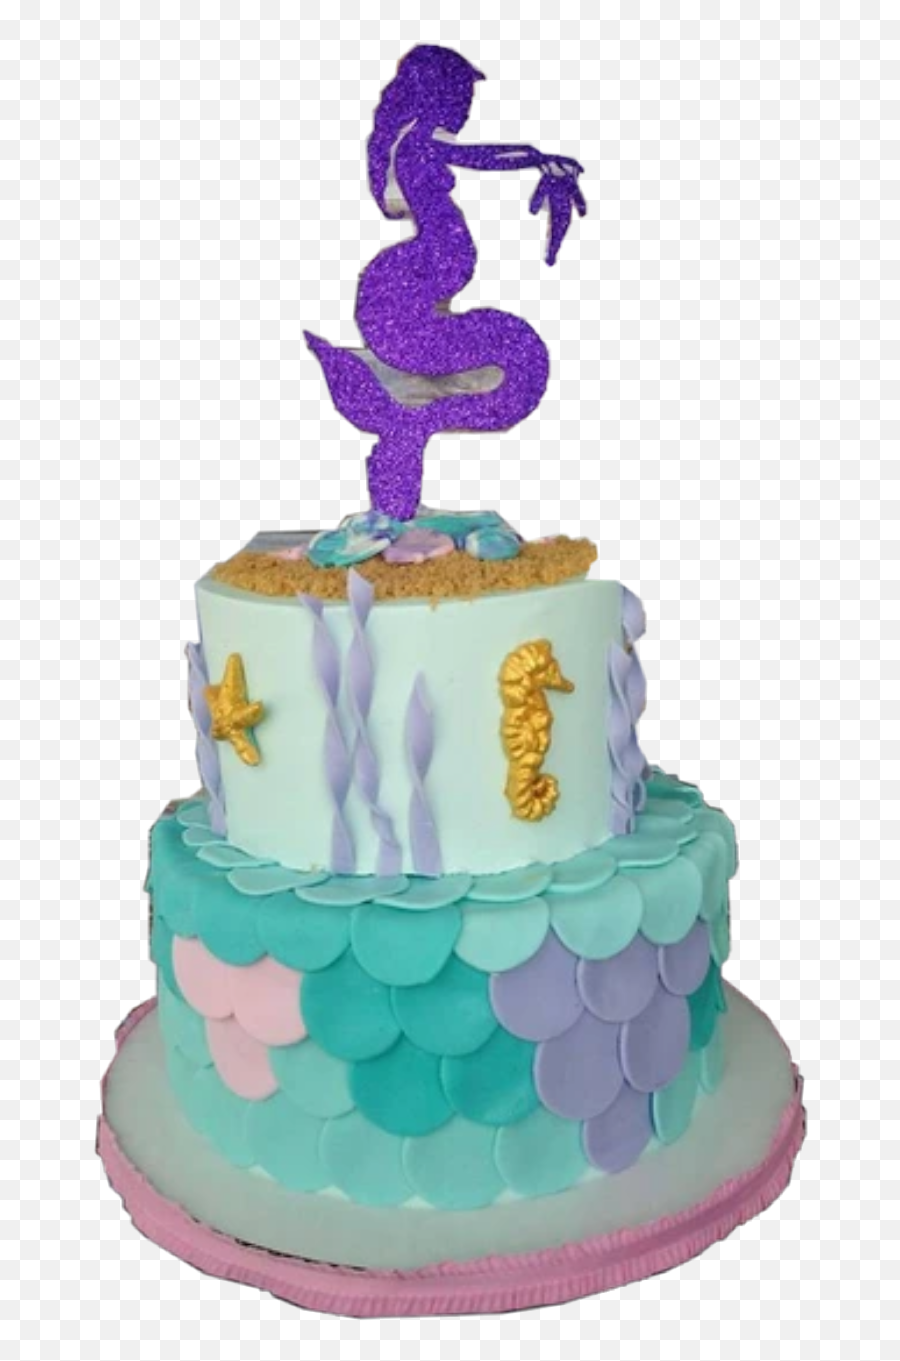 Trending - Cake Decorating Supply Emoji,Emoji Birthday Cakes At Walmart